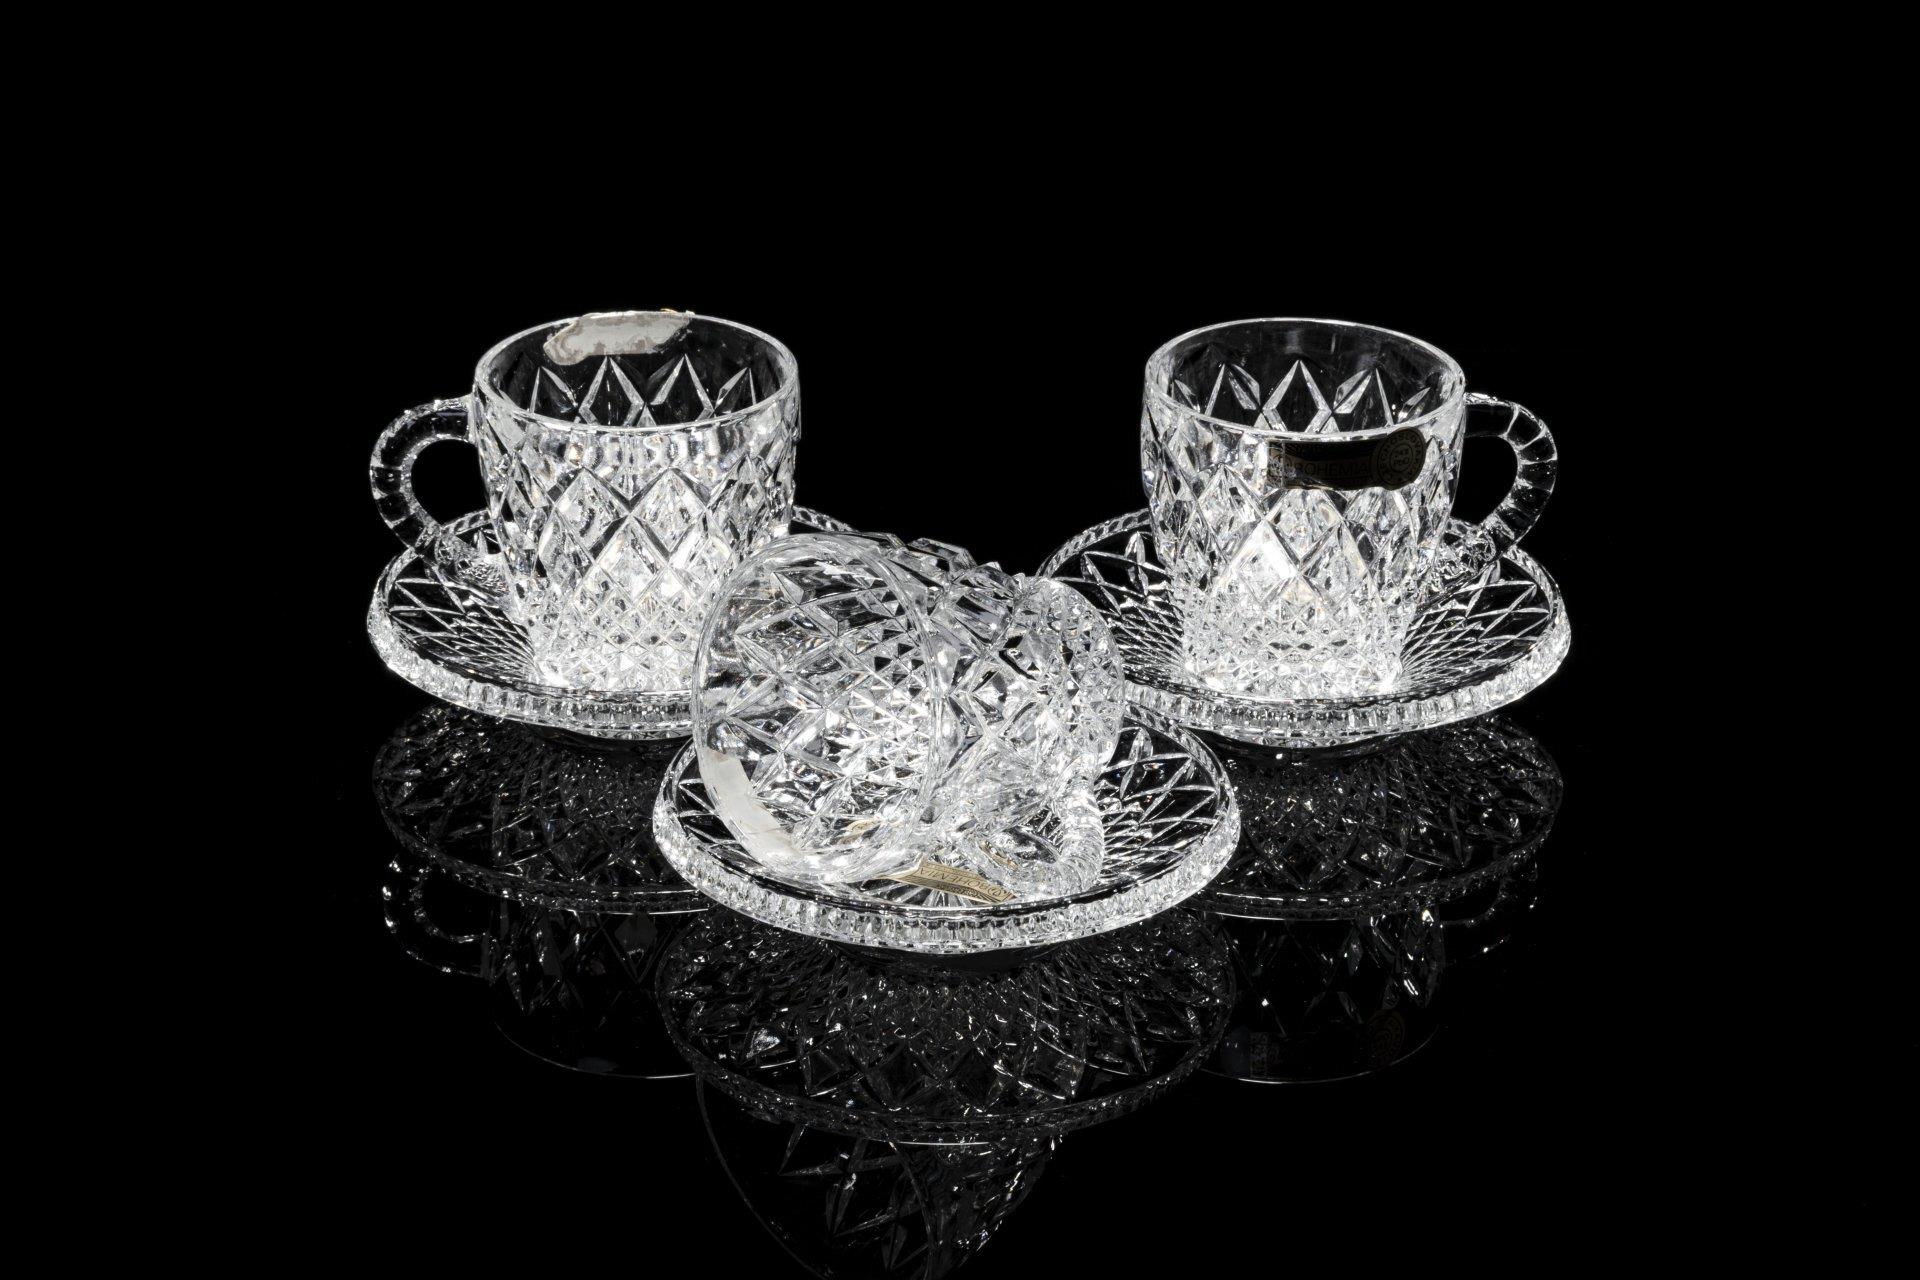 фото Набор из 3 чайных пар, хрусталь, фирма "bohemia crystal", чехия, 1992-2010 гг. однажды